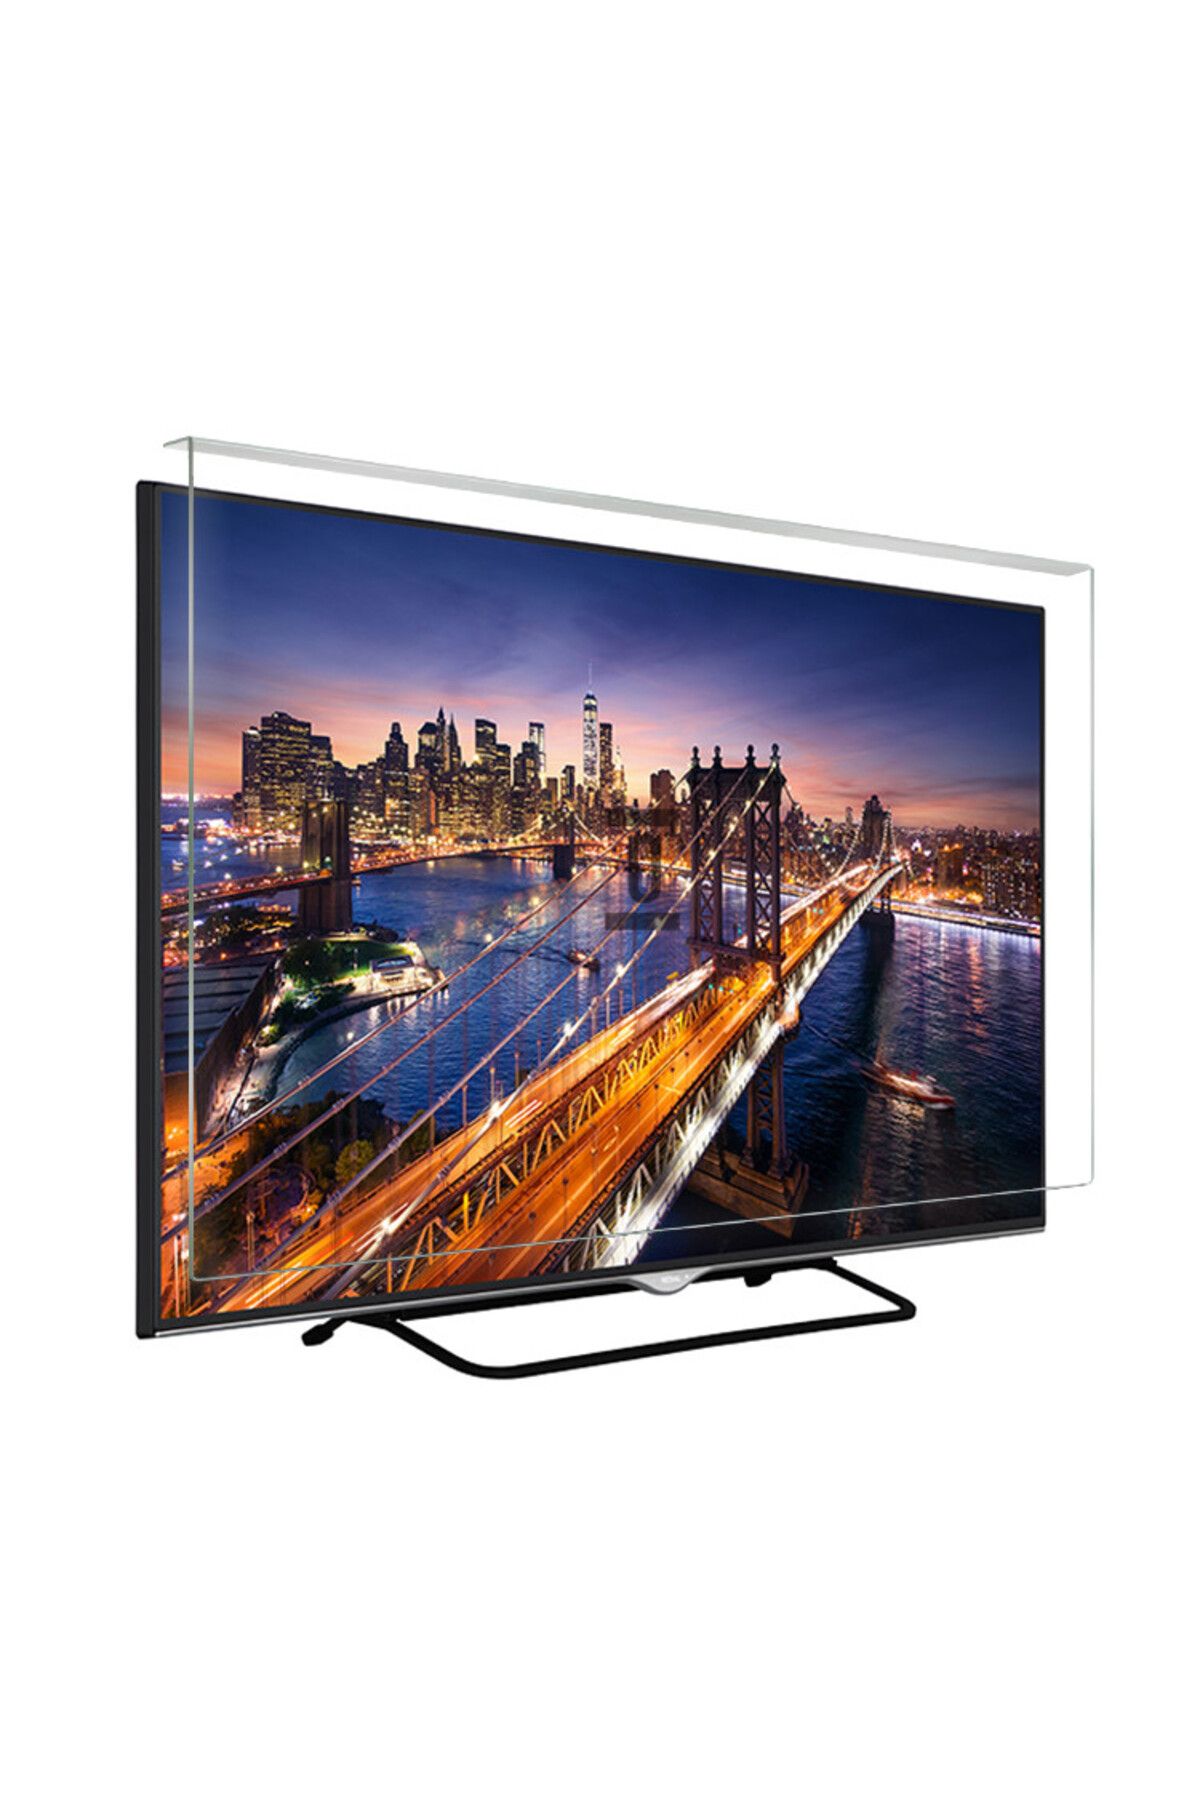 BESTOCLASS SEG 50SBU740 Tv Uyumlu Ekran Koruyucu Düz (Flat) Ekran